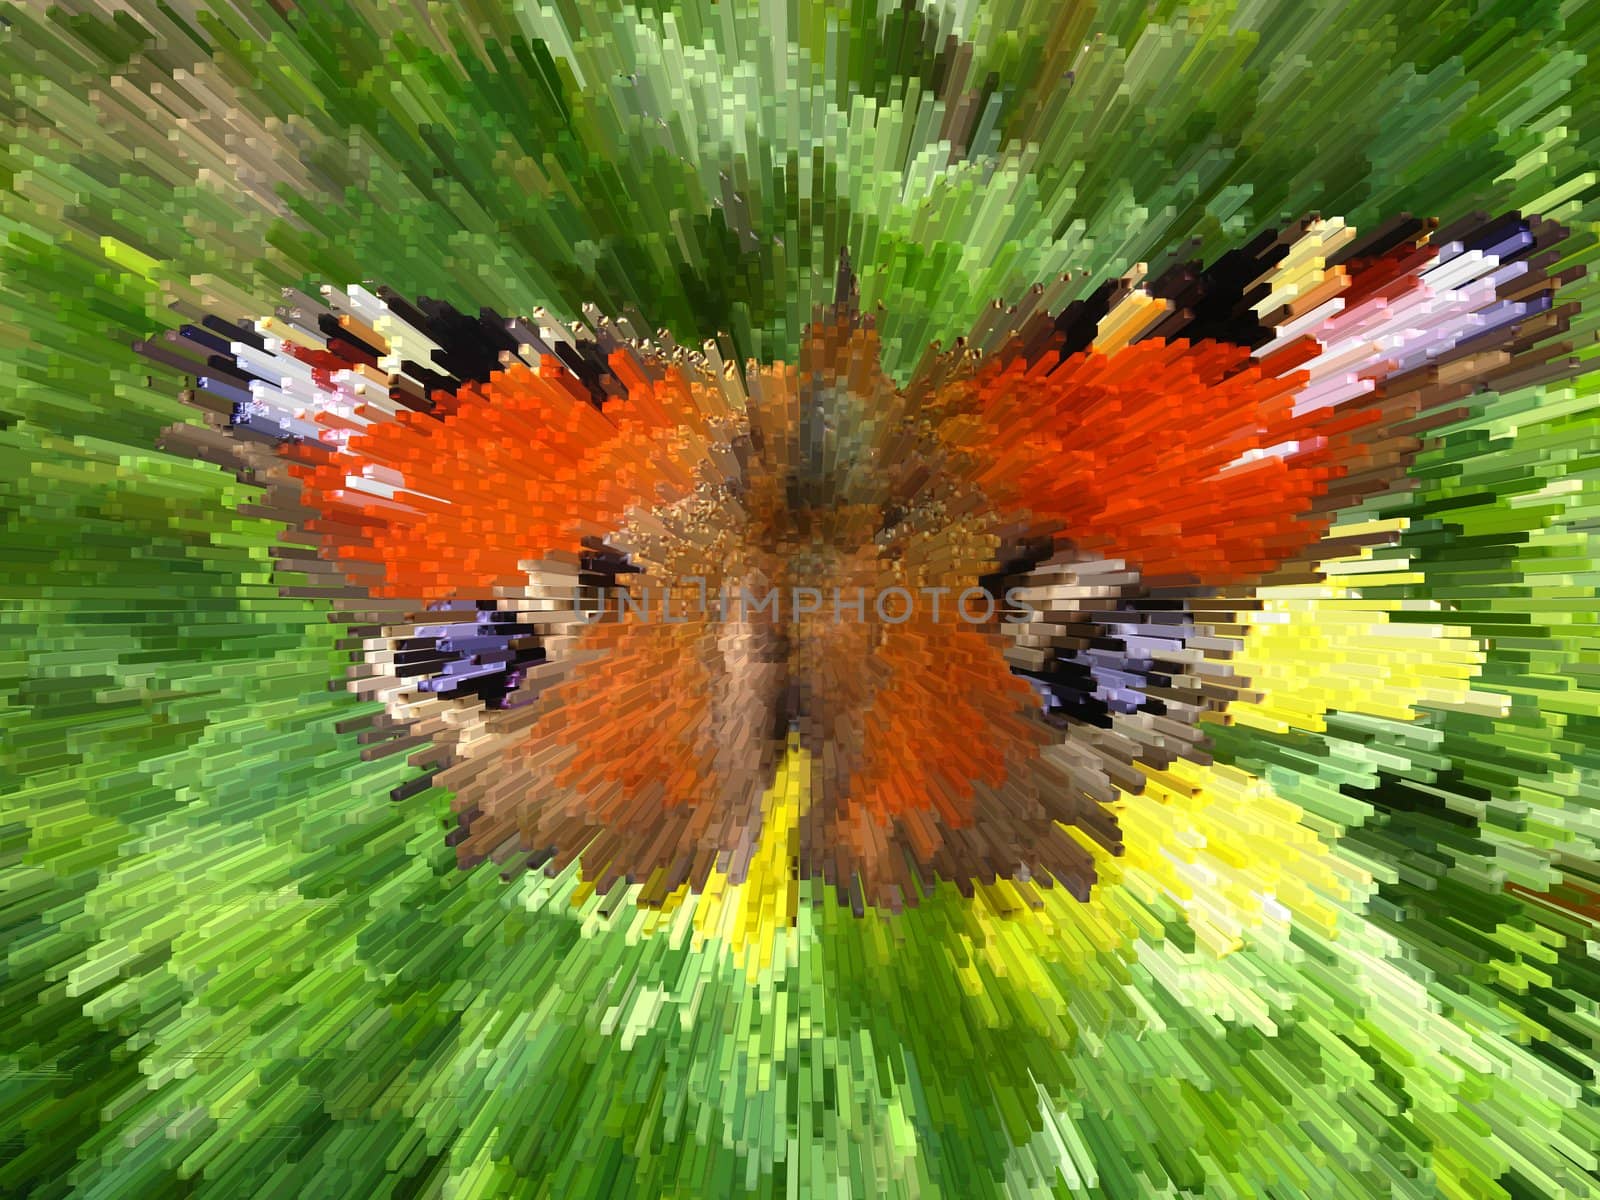 Motley peacock eye by alexmak